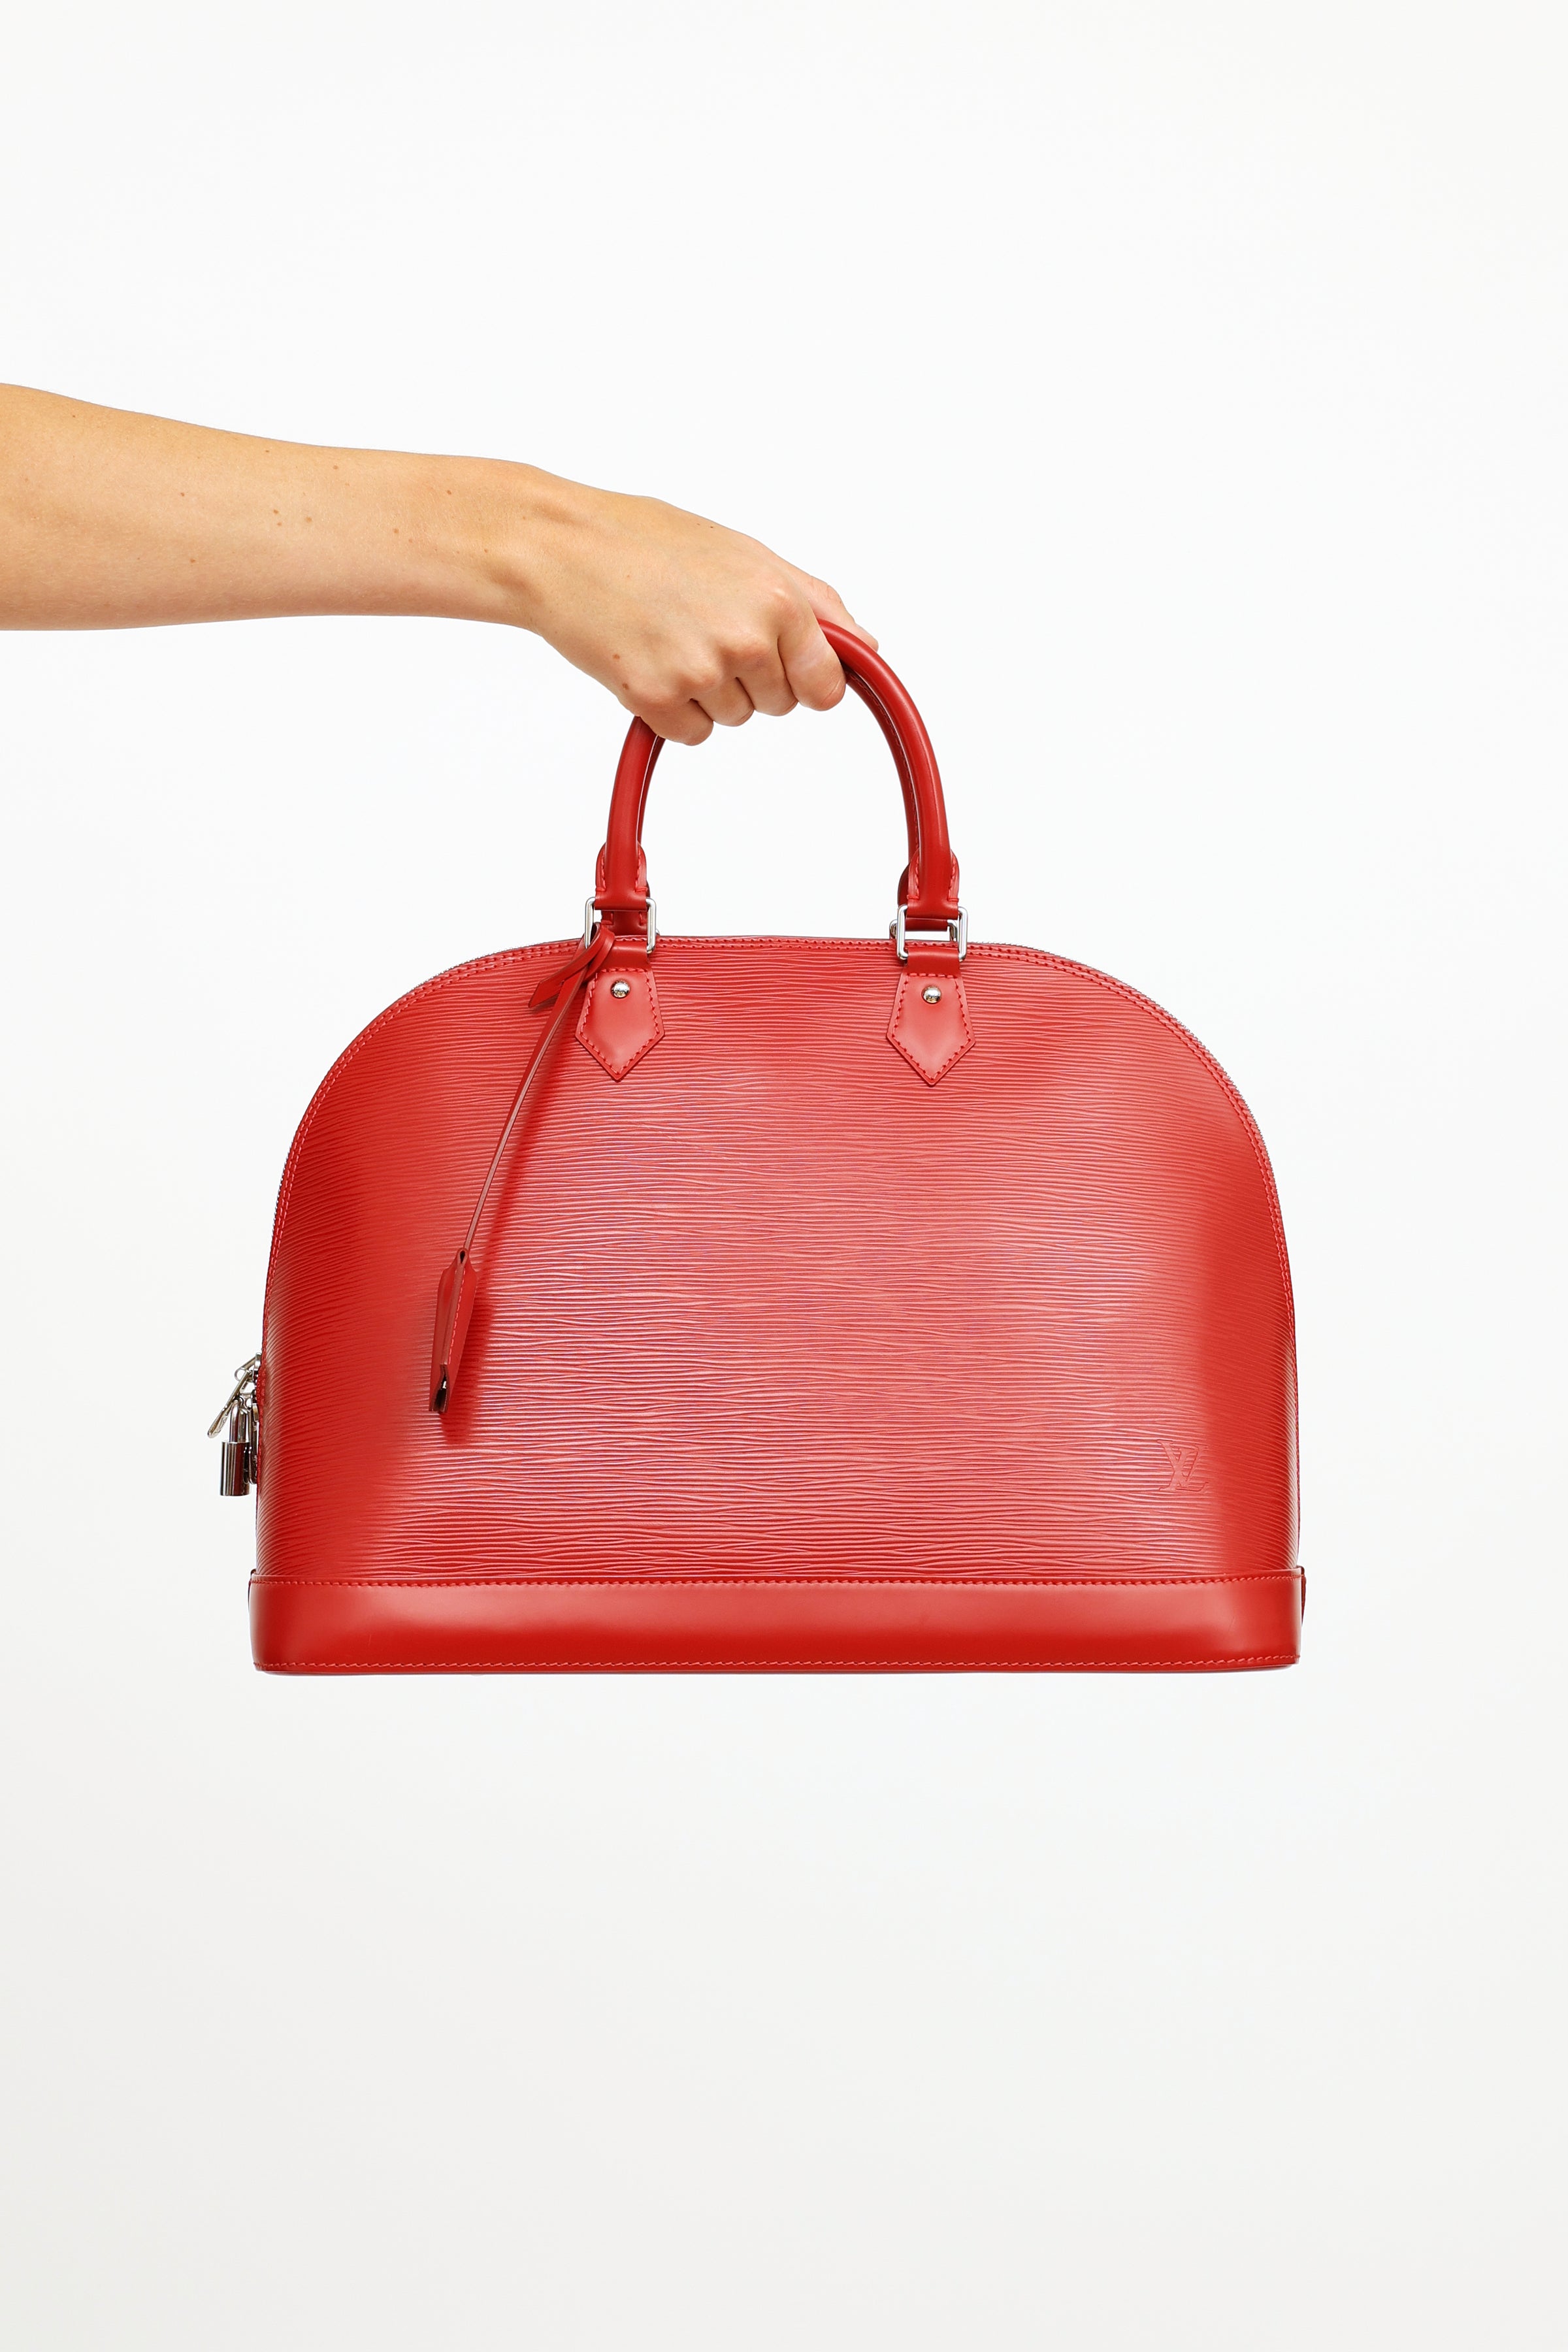 Lovin My Bags cleaner on Louis Vuitton Alma bag - Lovin My Bags